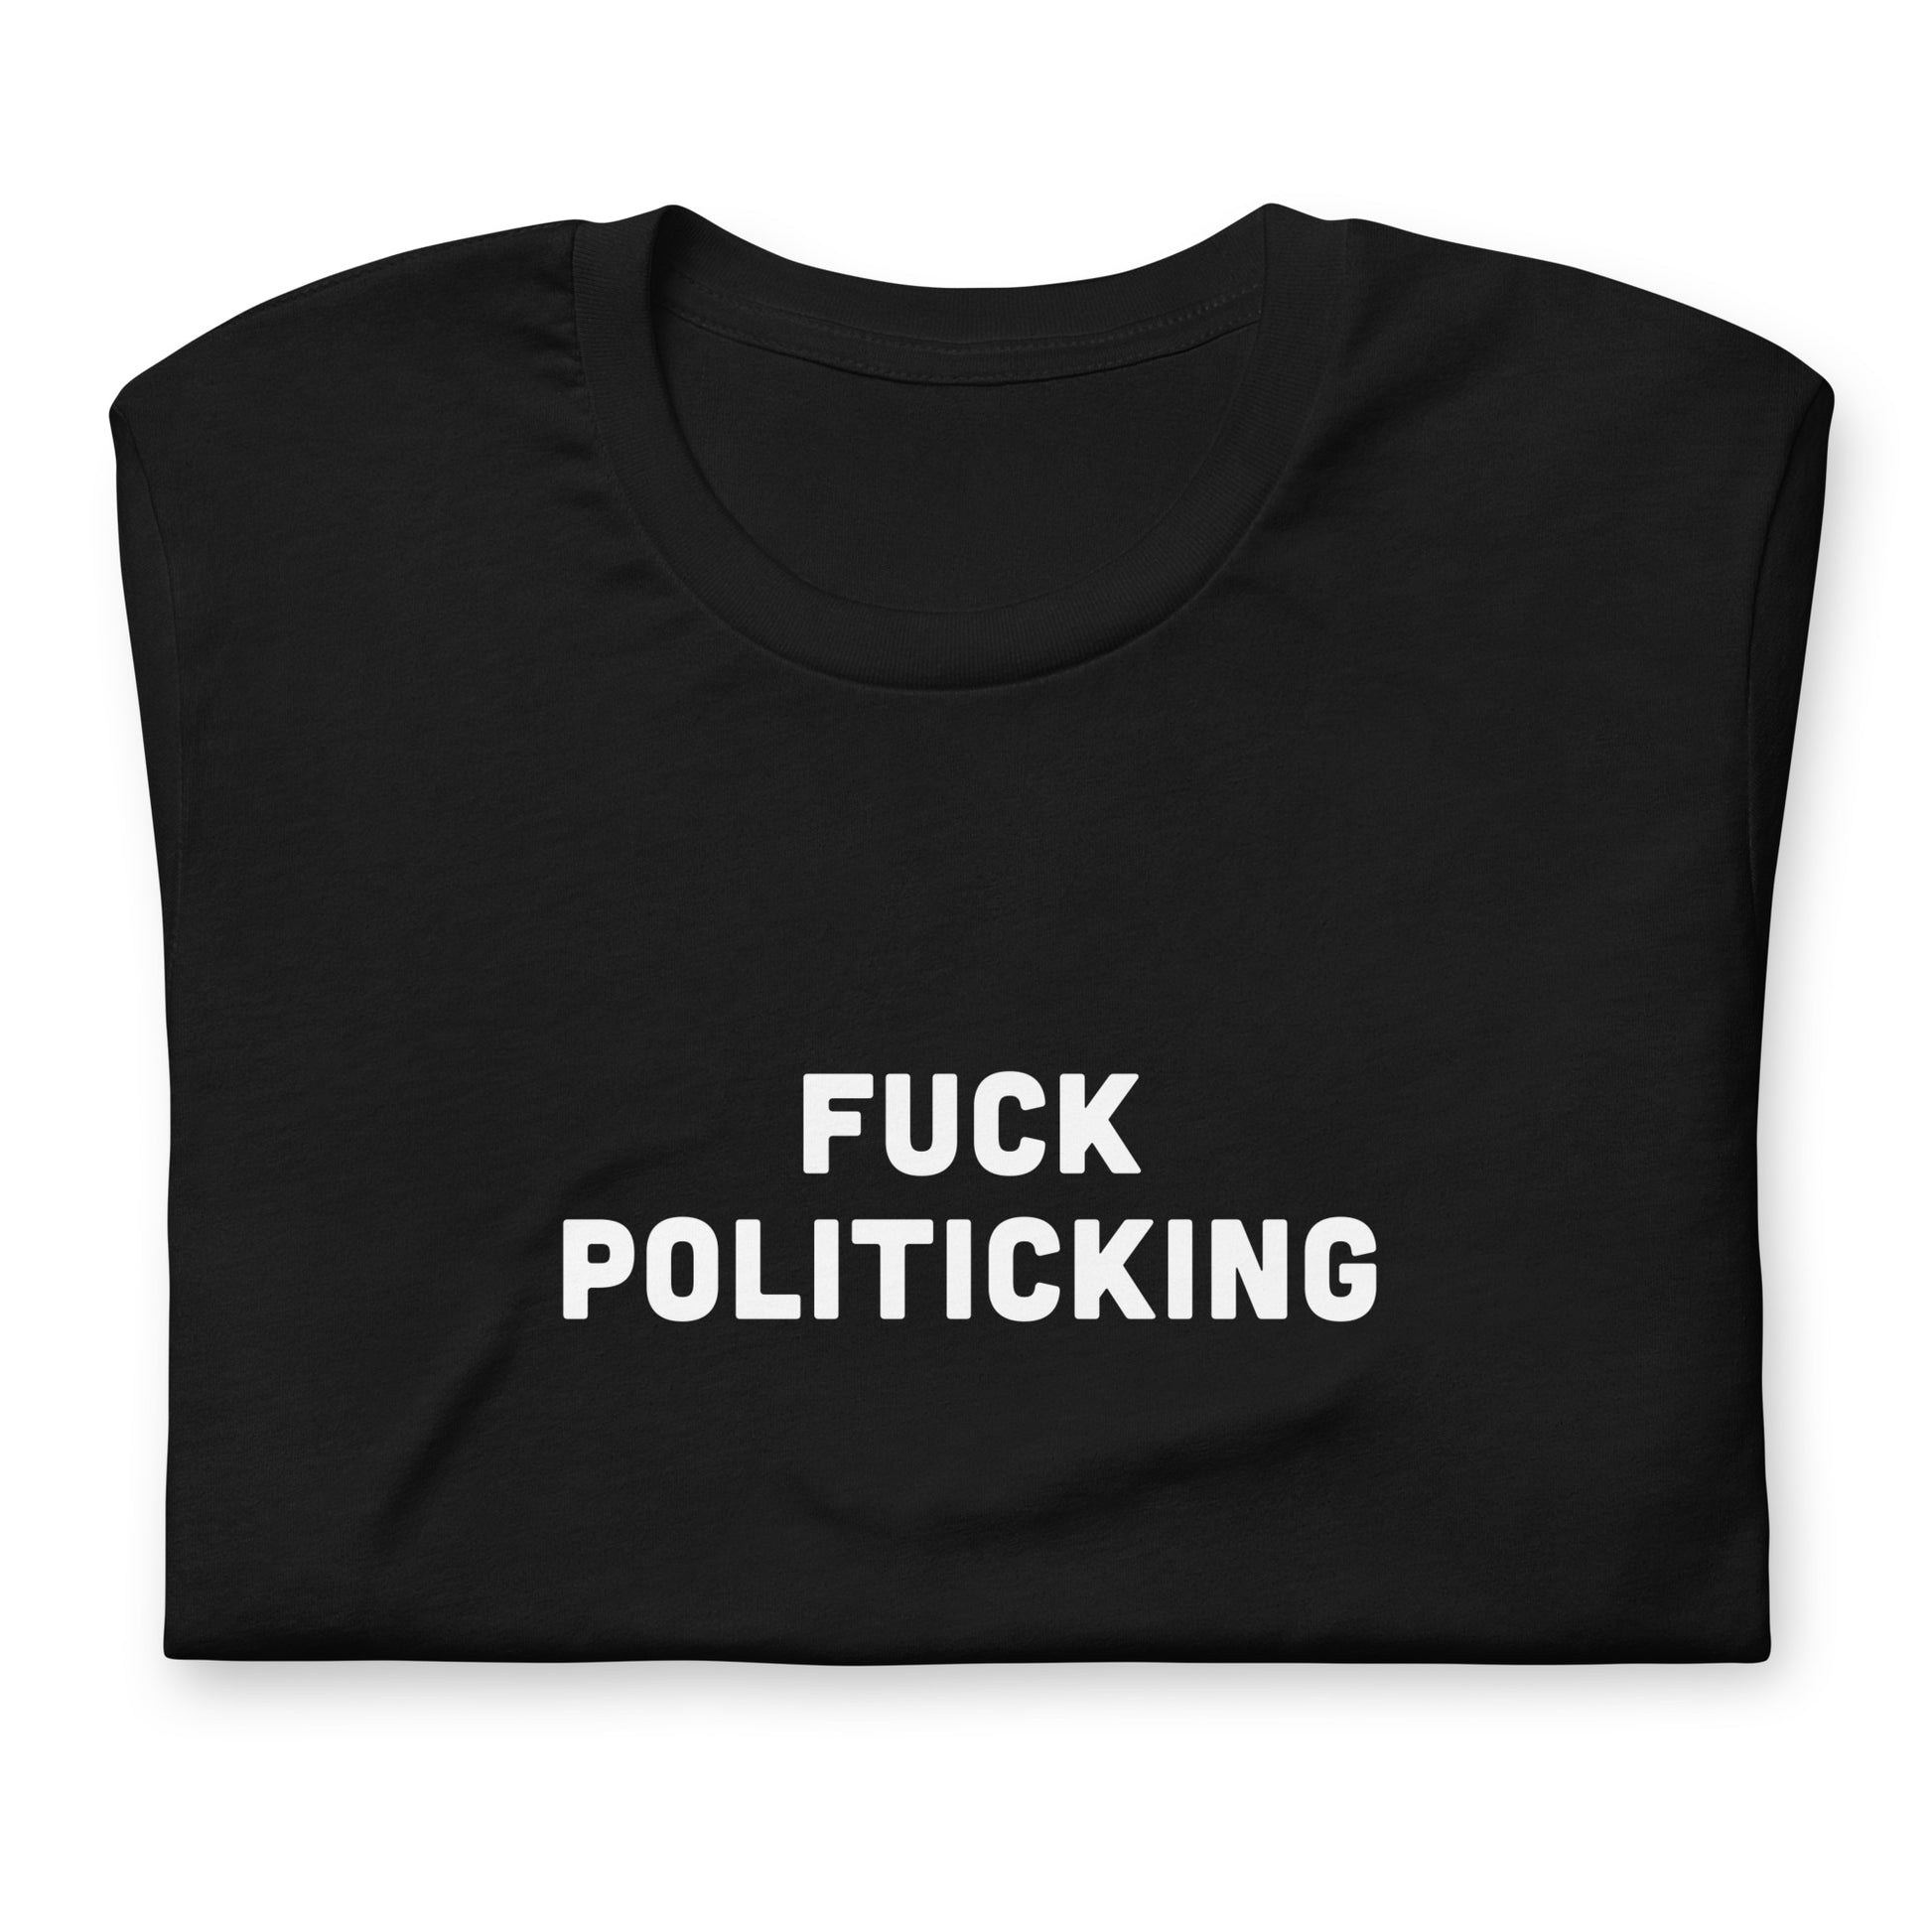 Fuck Politicking T-Shirt Size M Color Black